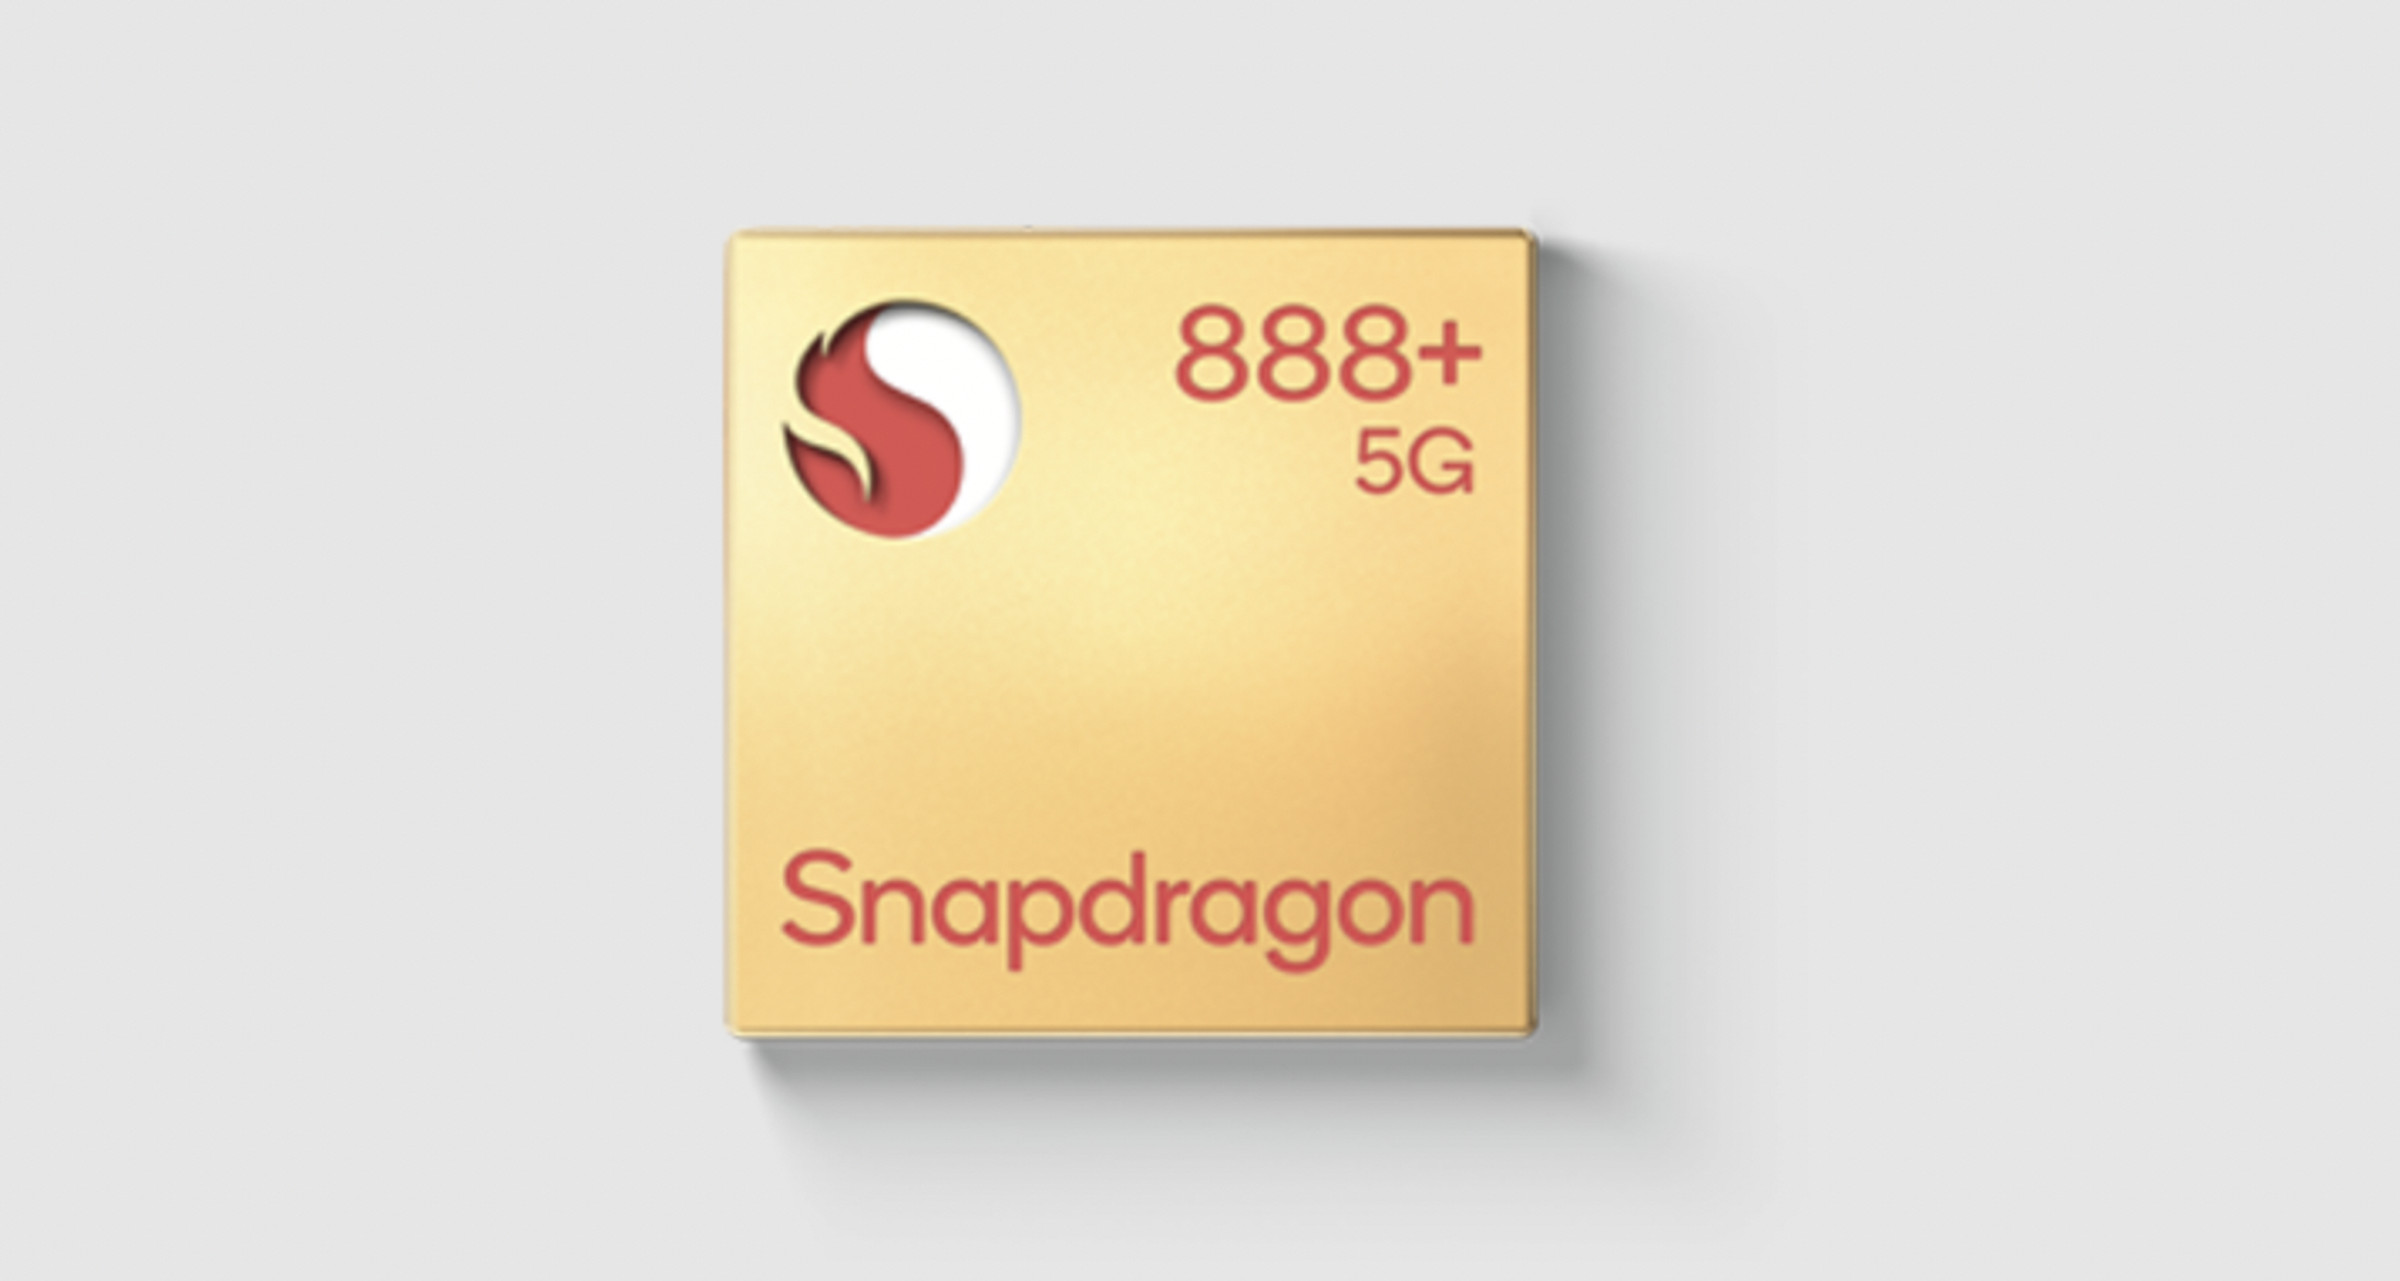 The already “Qualcomm”-less Snapdragon 888 Plus icon